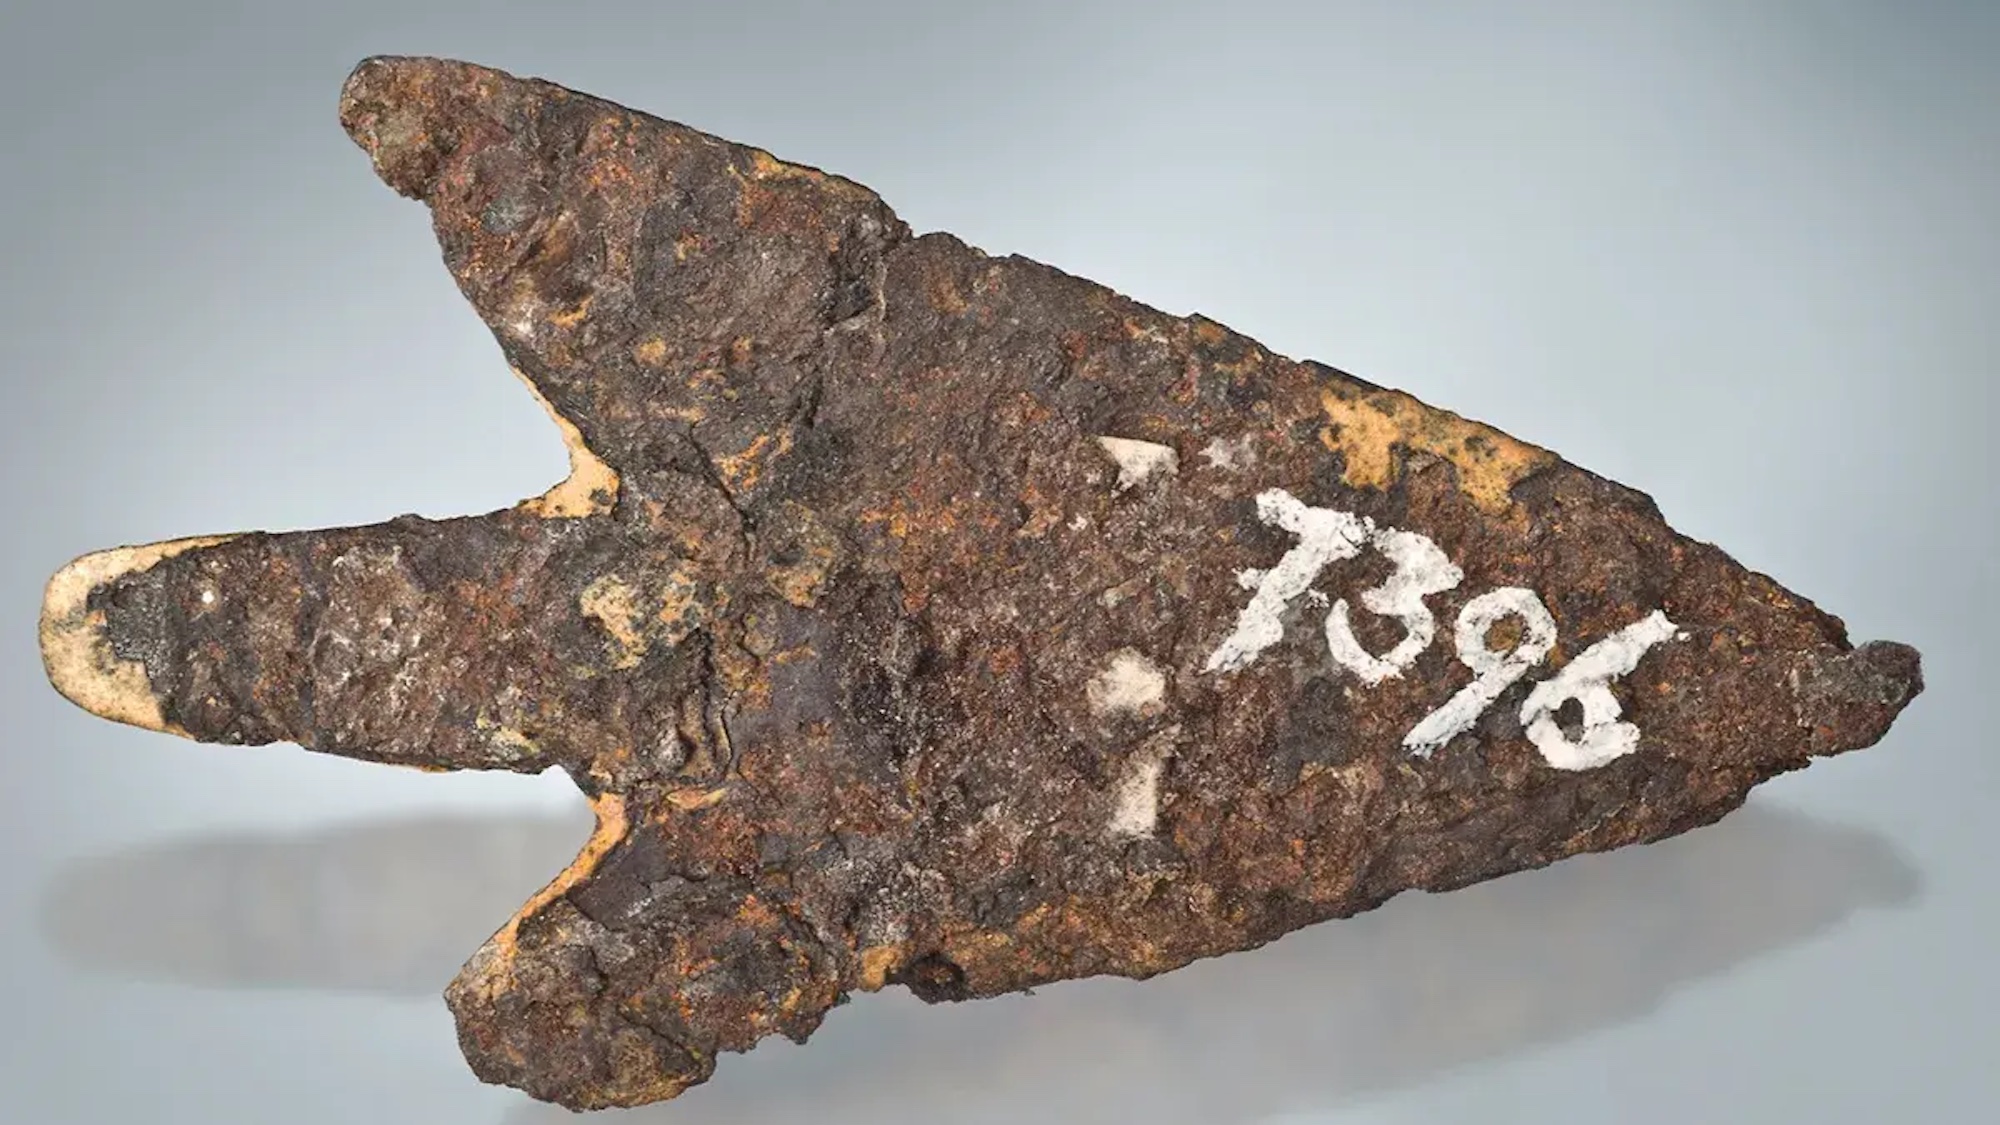 Bronze Age arrow made of meteoric iron